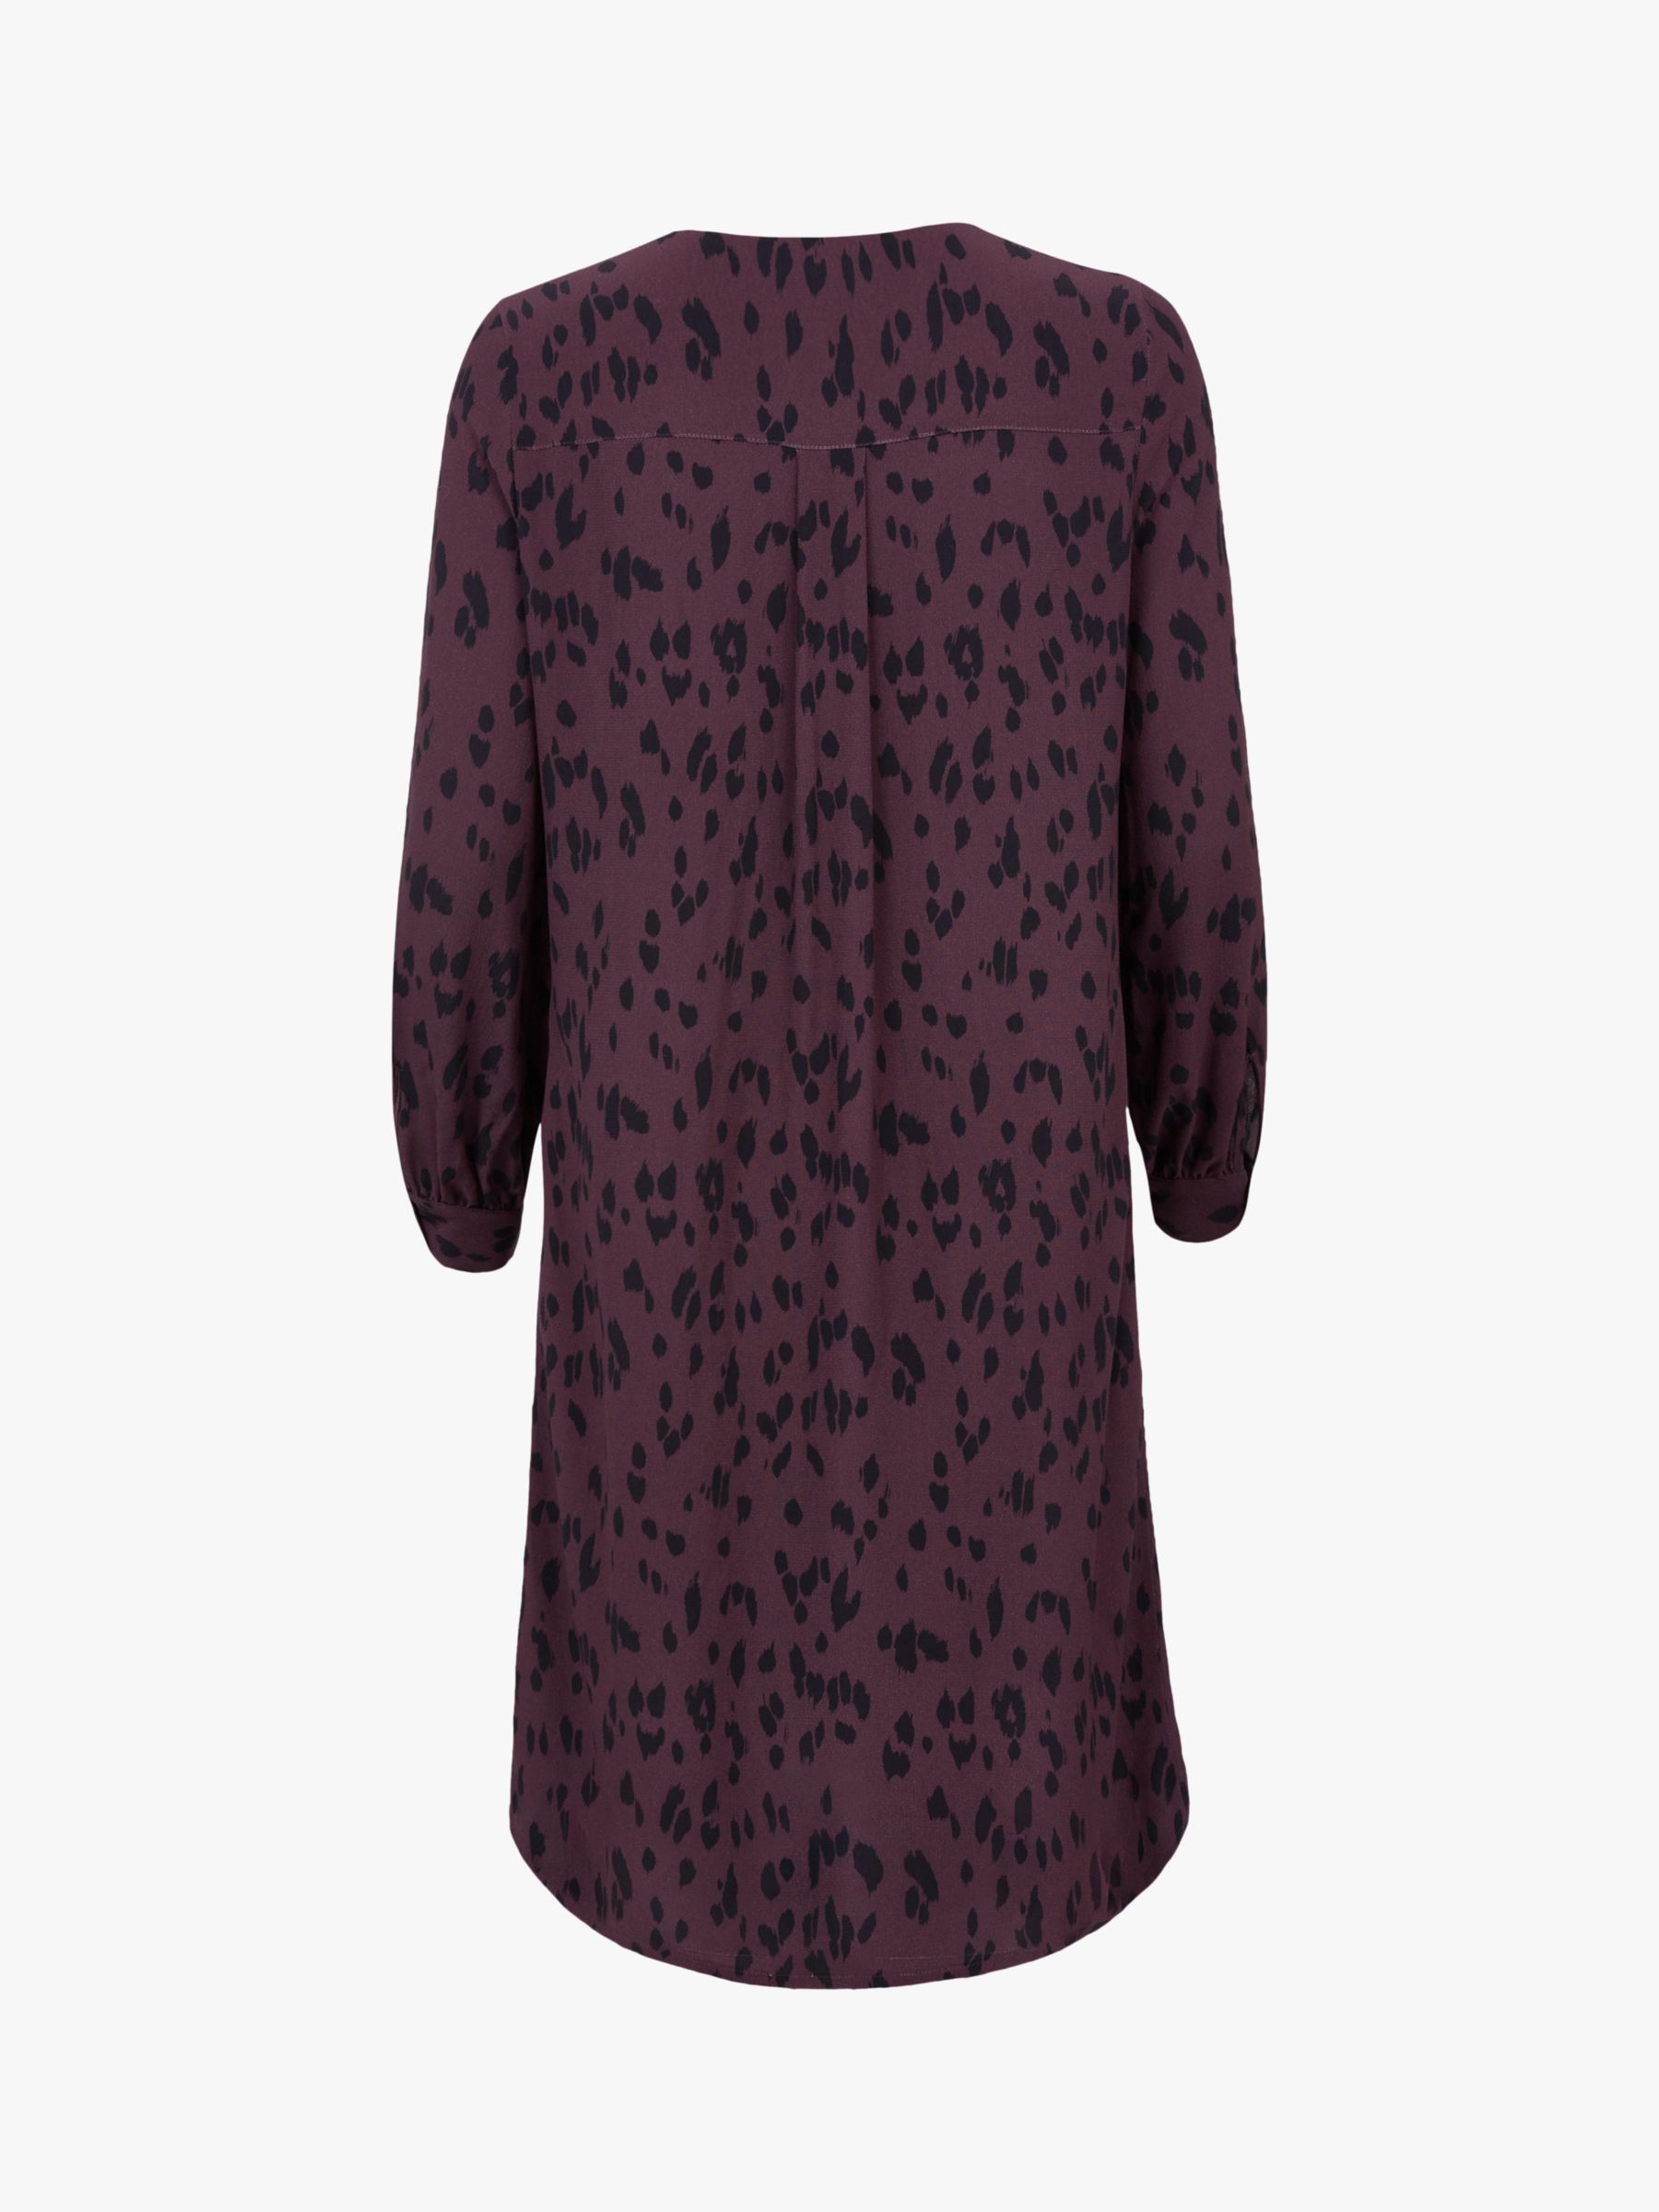 Celtic & Co. Printed Pleat Front Knee Length Dress, Purple/Black, 8